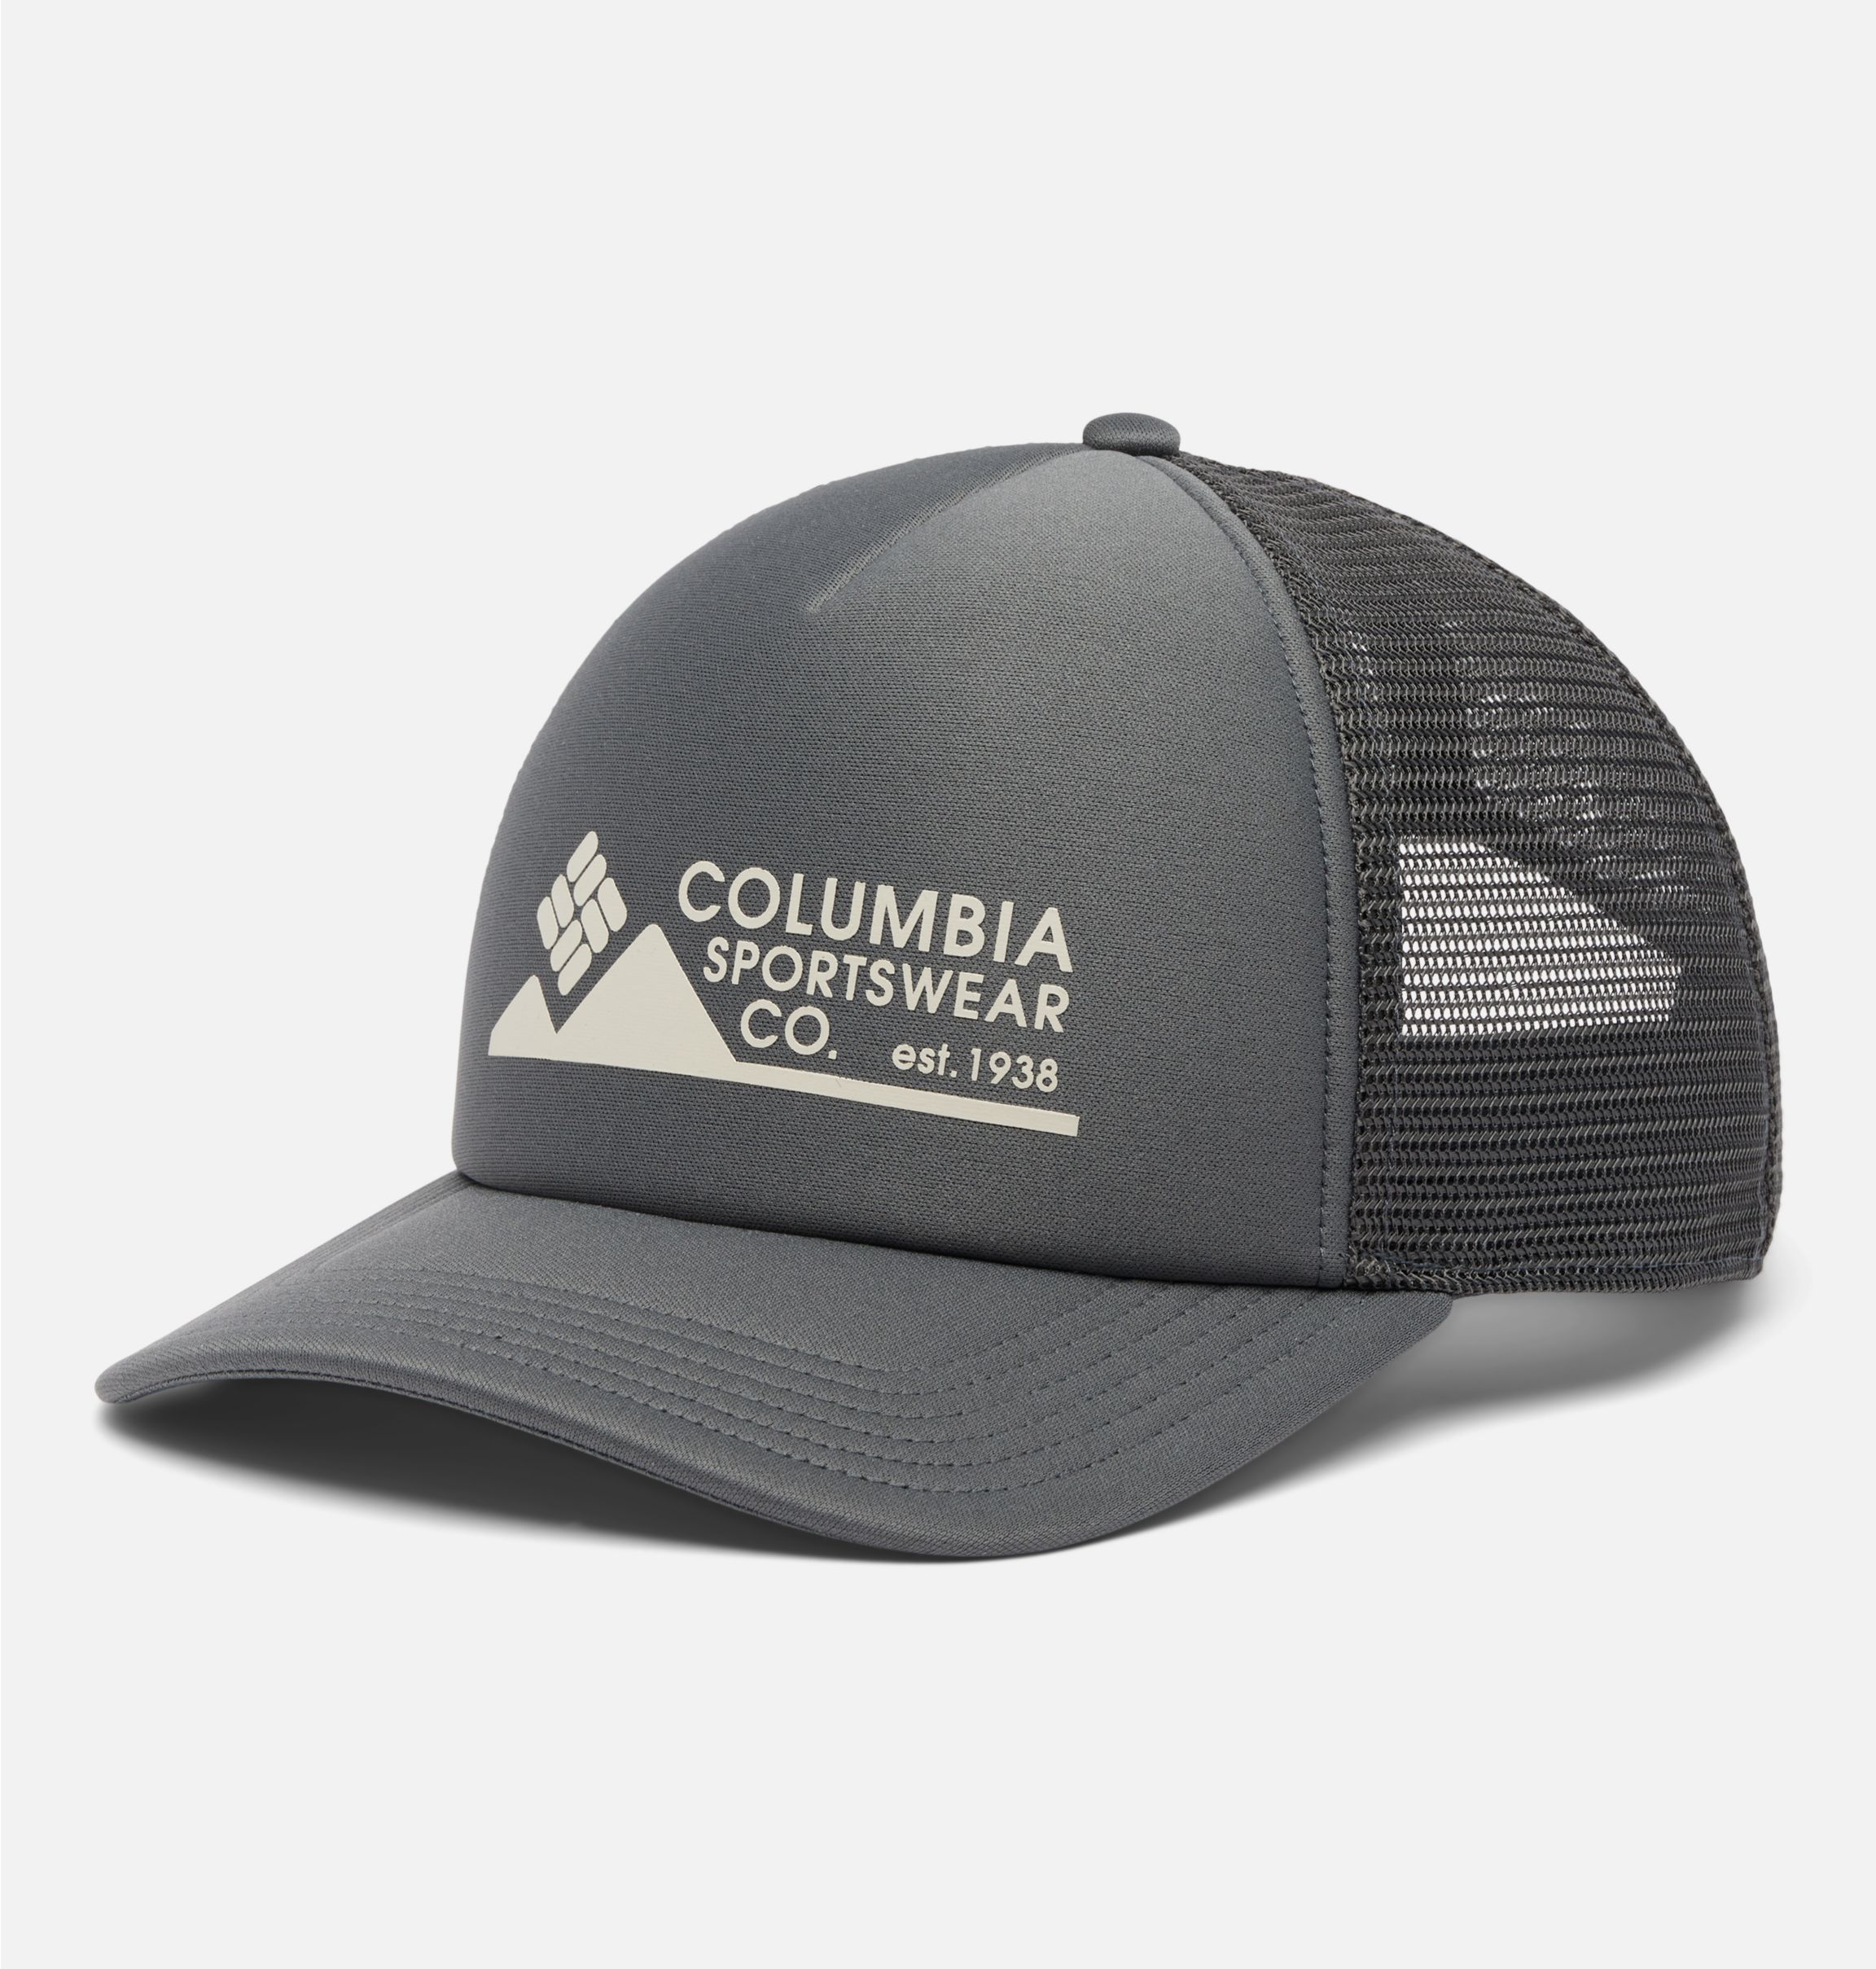 Columbia Women's White Trucker Hat Snapback Hiker Cap Black Mesh New